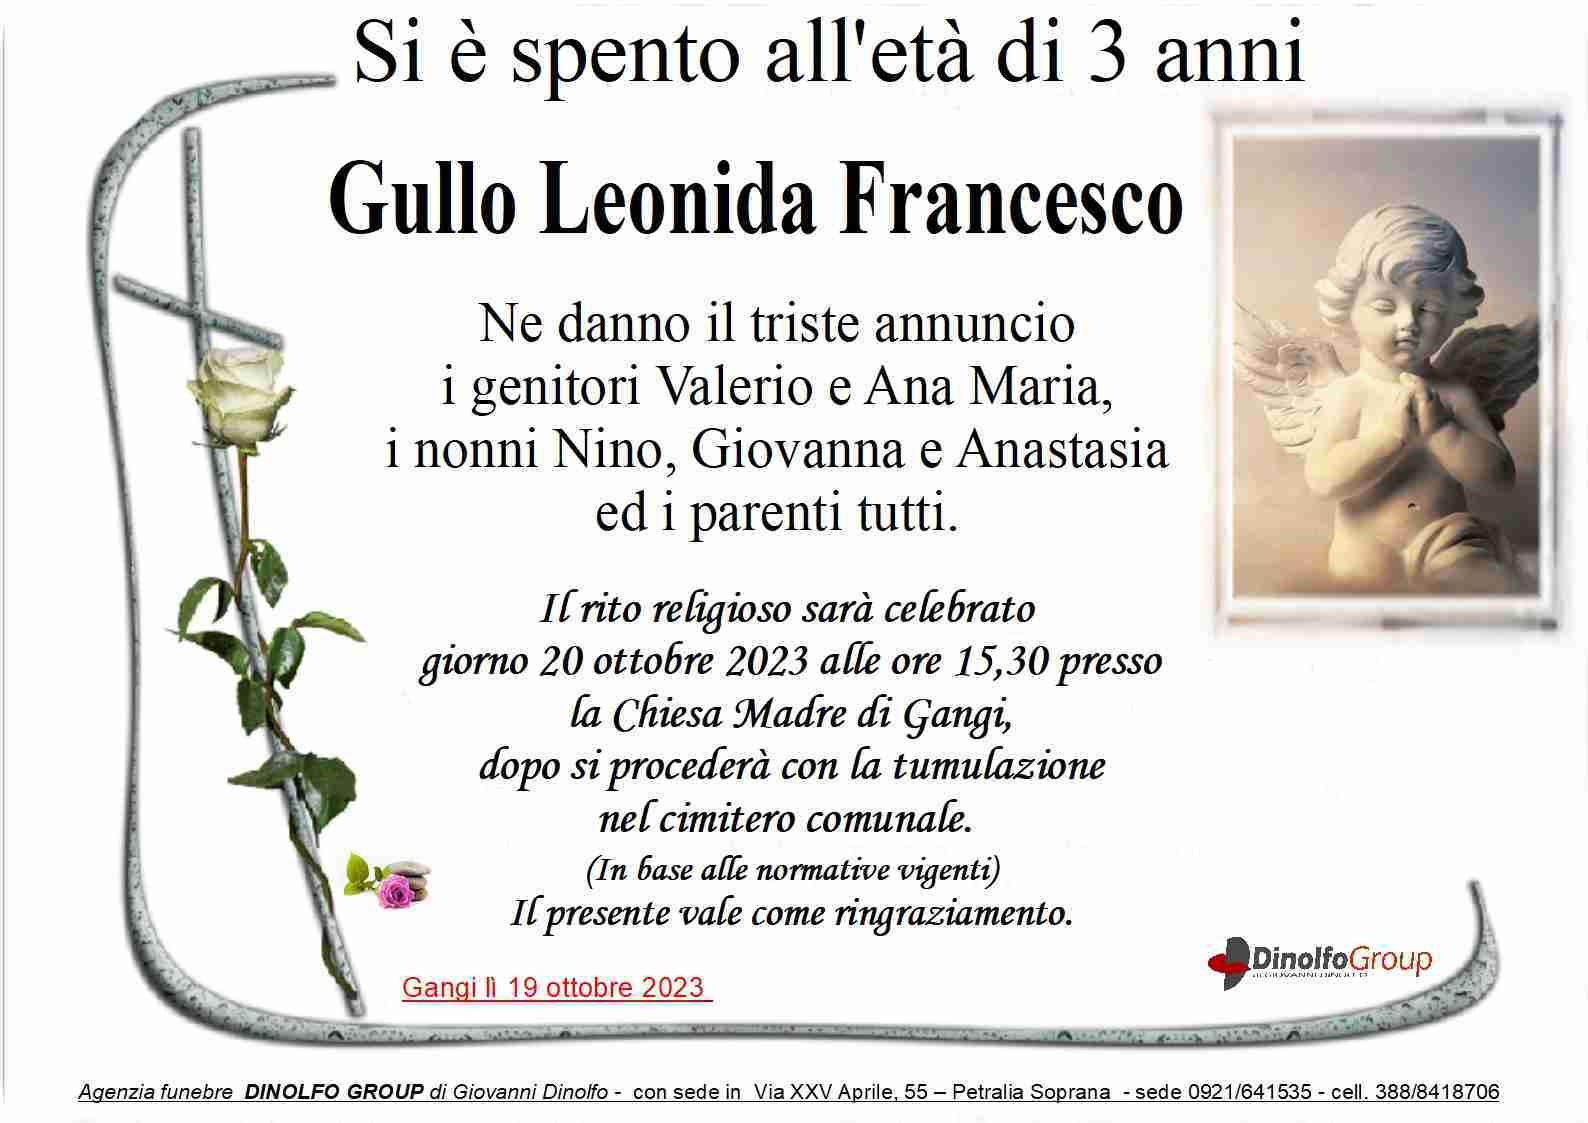 Leonida Francesco Gullo